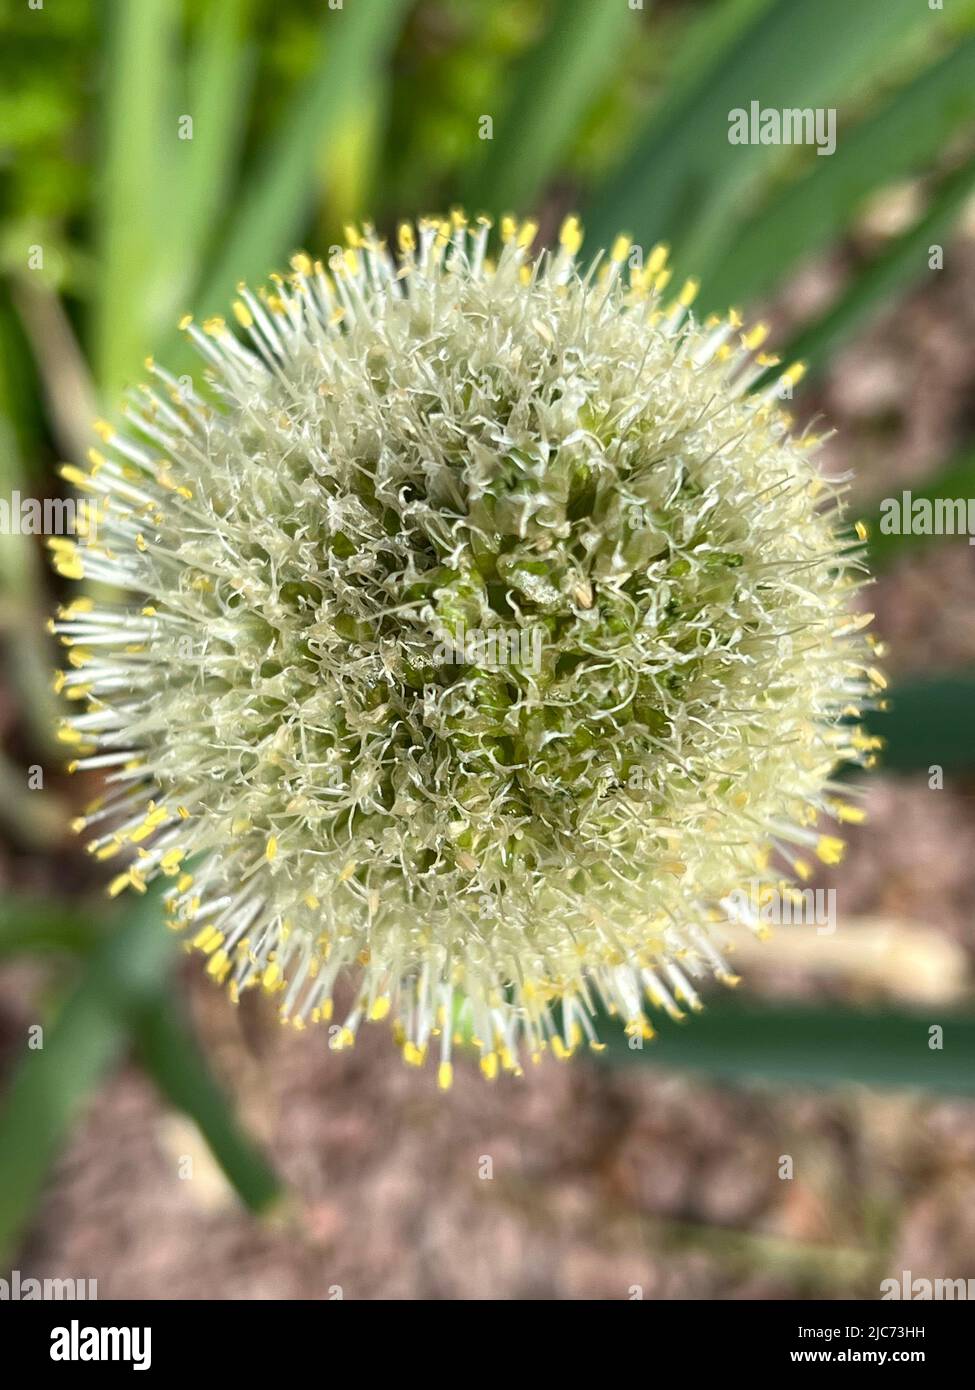 Oignon gallois - Allium fistulosum - Frühlingszwiebel - ciboule Banque D'Images